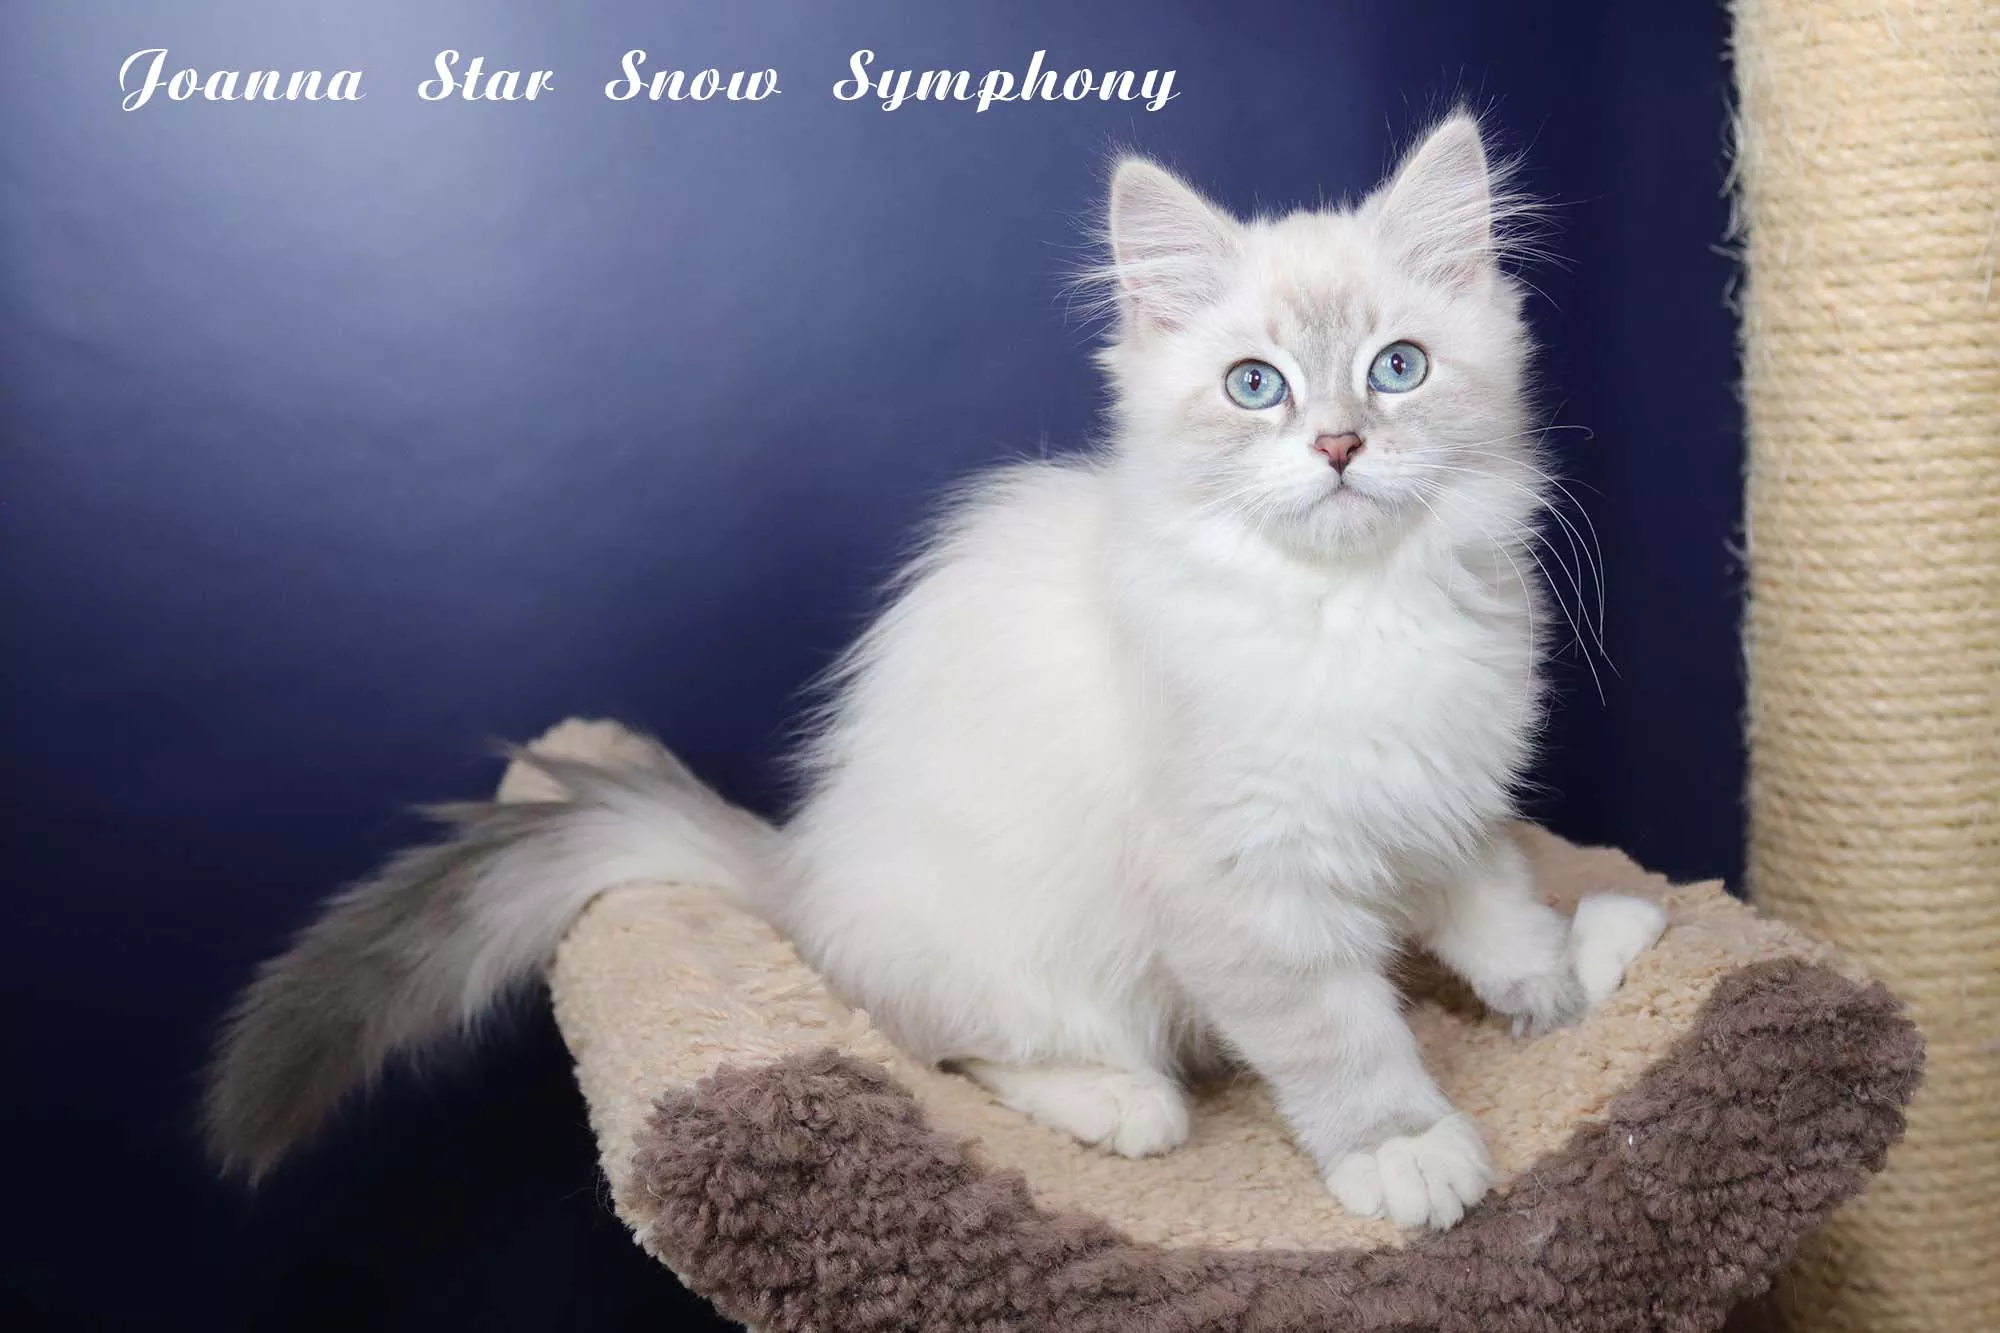 Joanna Star Snow Symphony